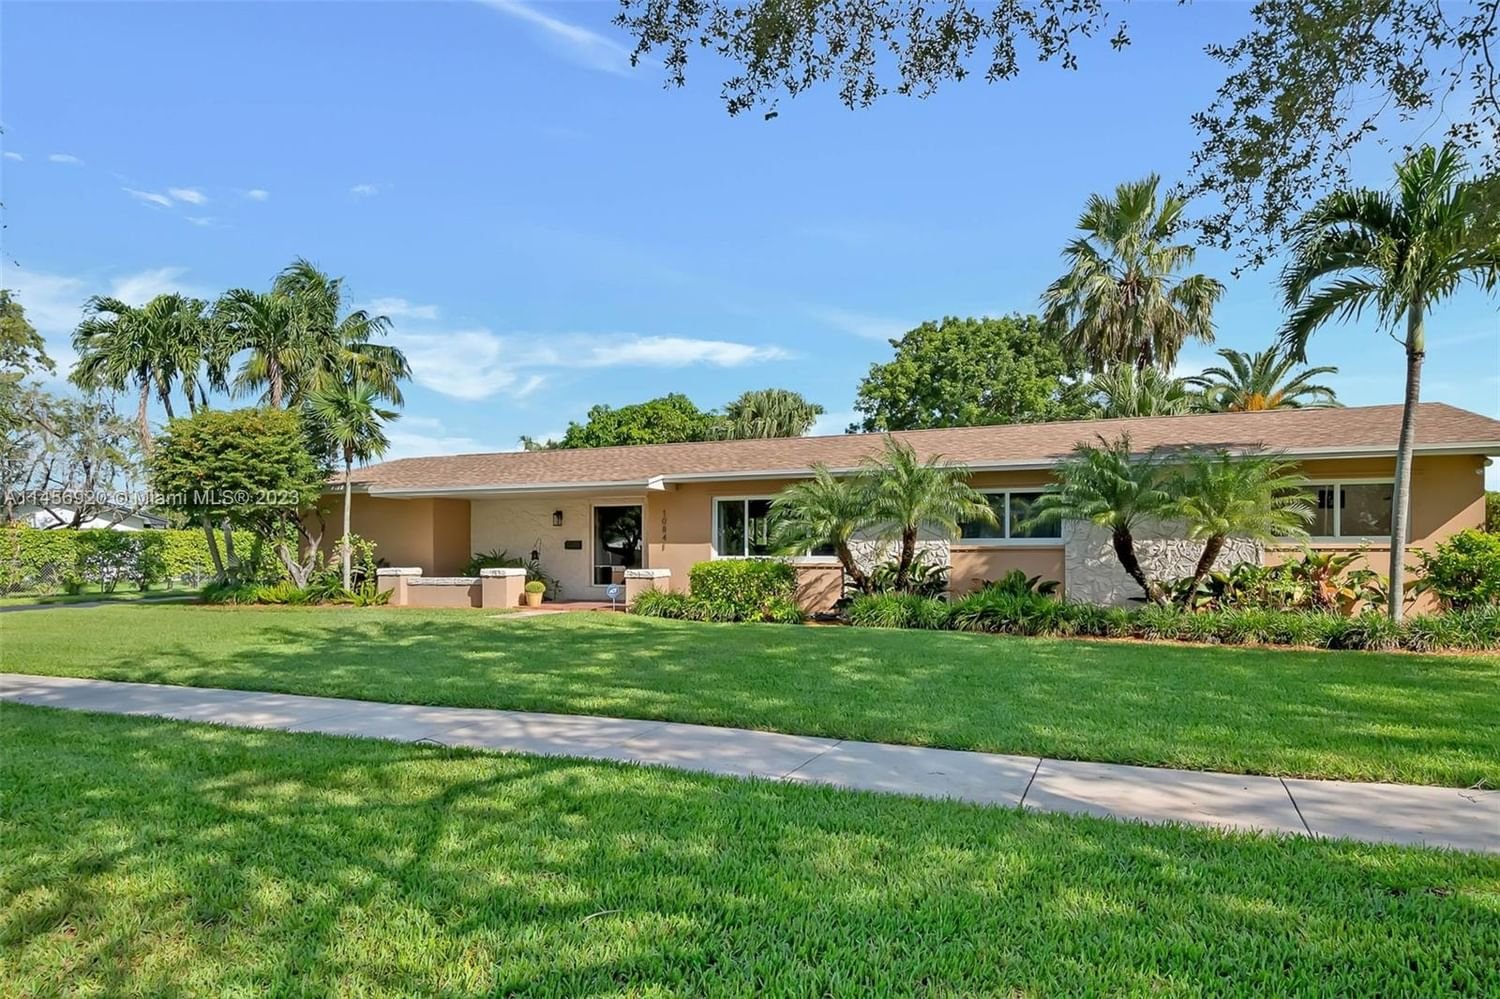 Real estate property located at 10841 120th St, Miami-Dade County, Miami, FL